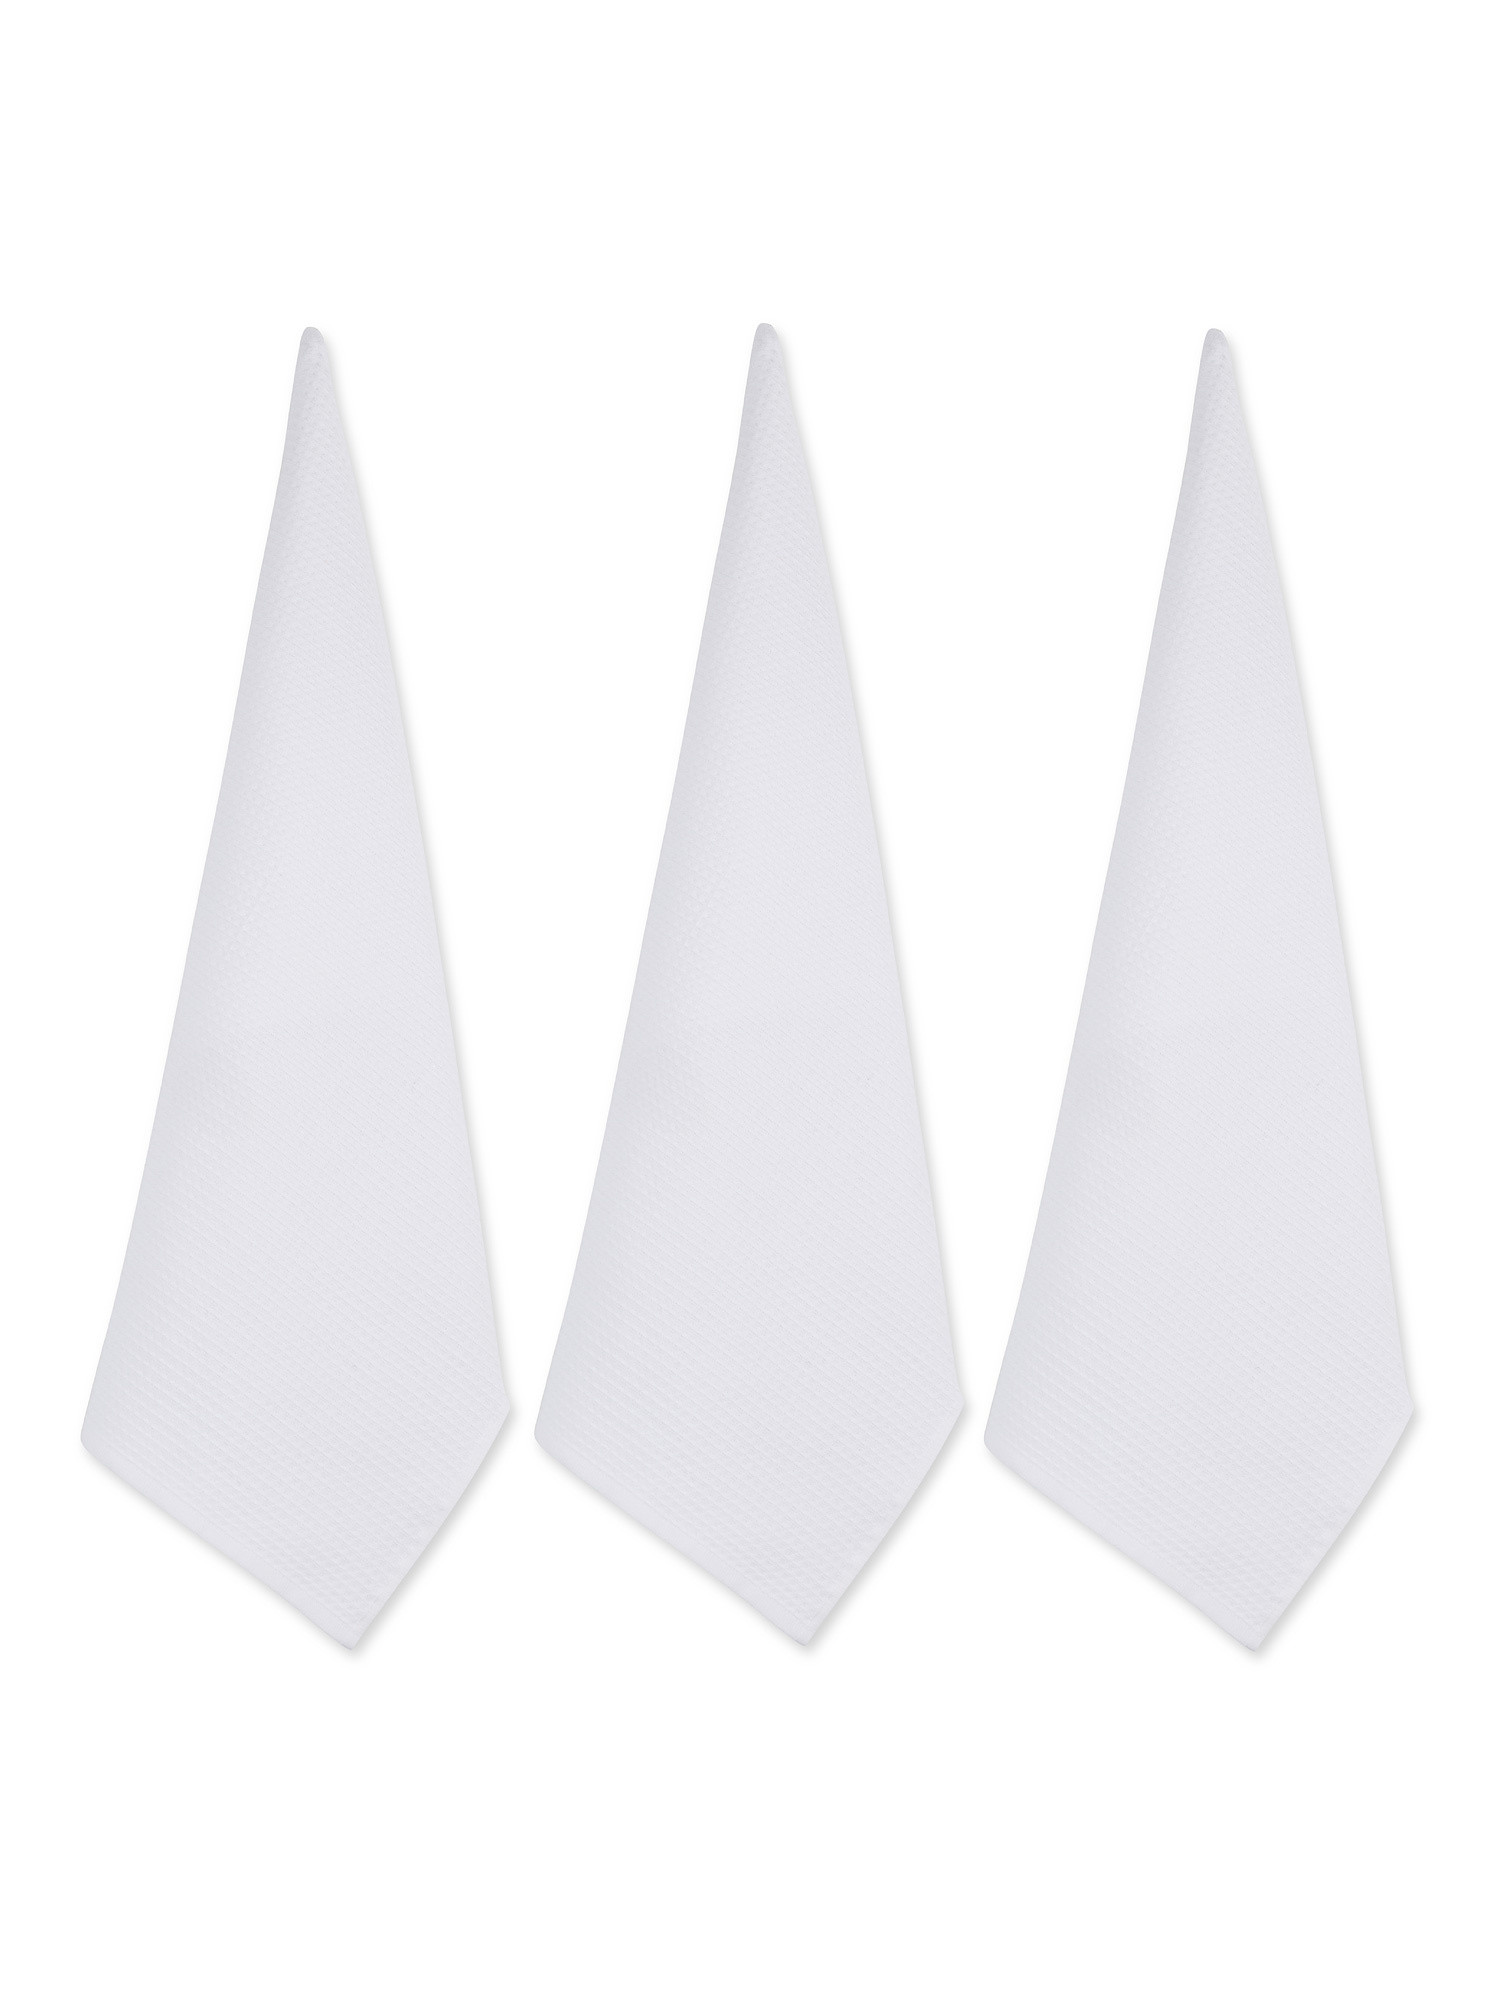 Set of 3 plain color cotton terry cloths, White, large image number 0